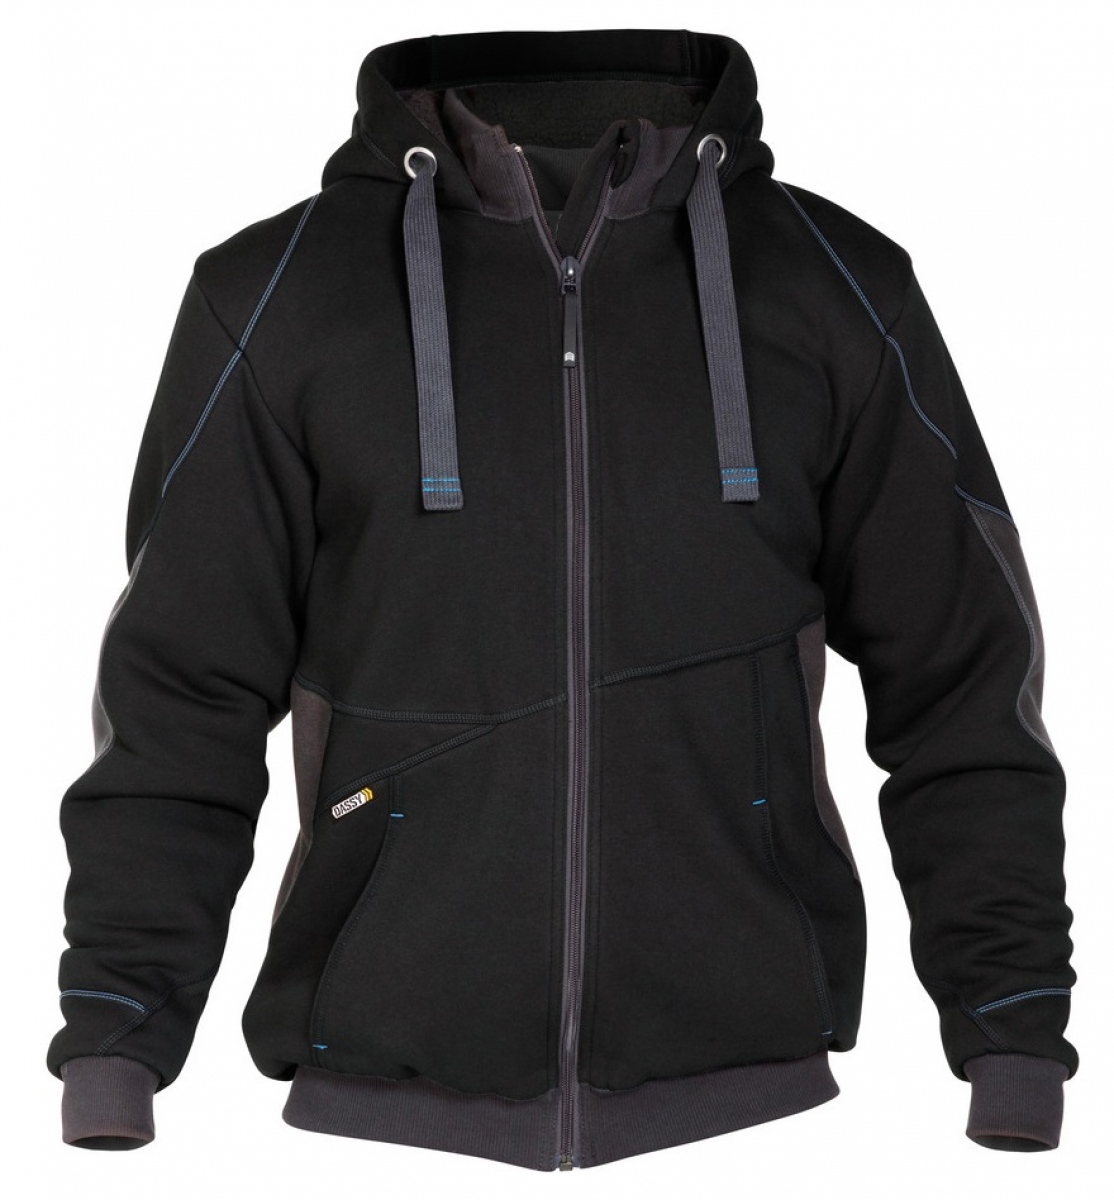 DASSY-Workwear, Sweatshirt-Jacke "PULSE", schwarz/grau